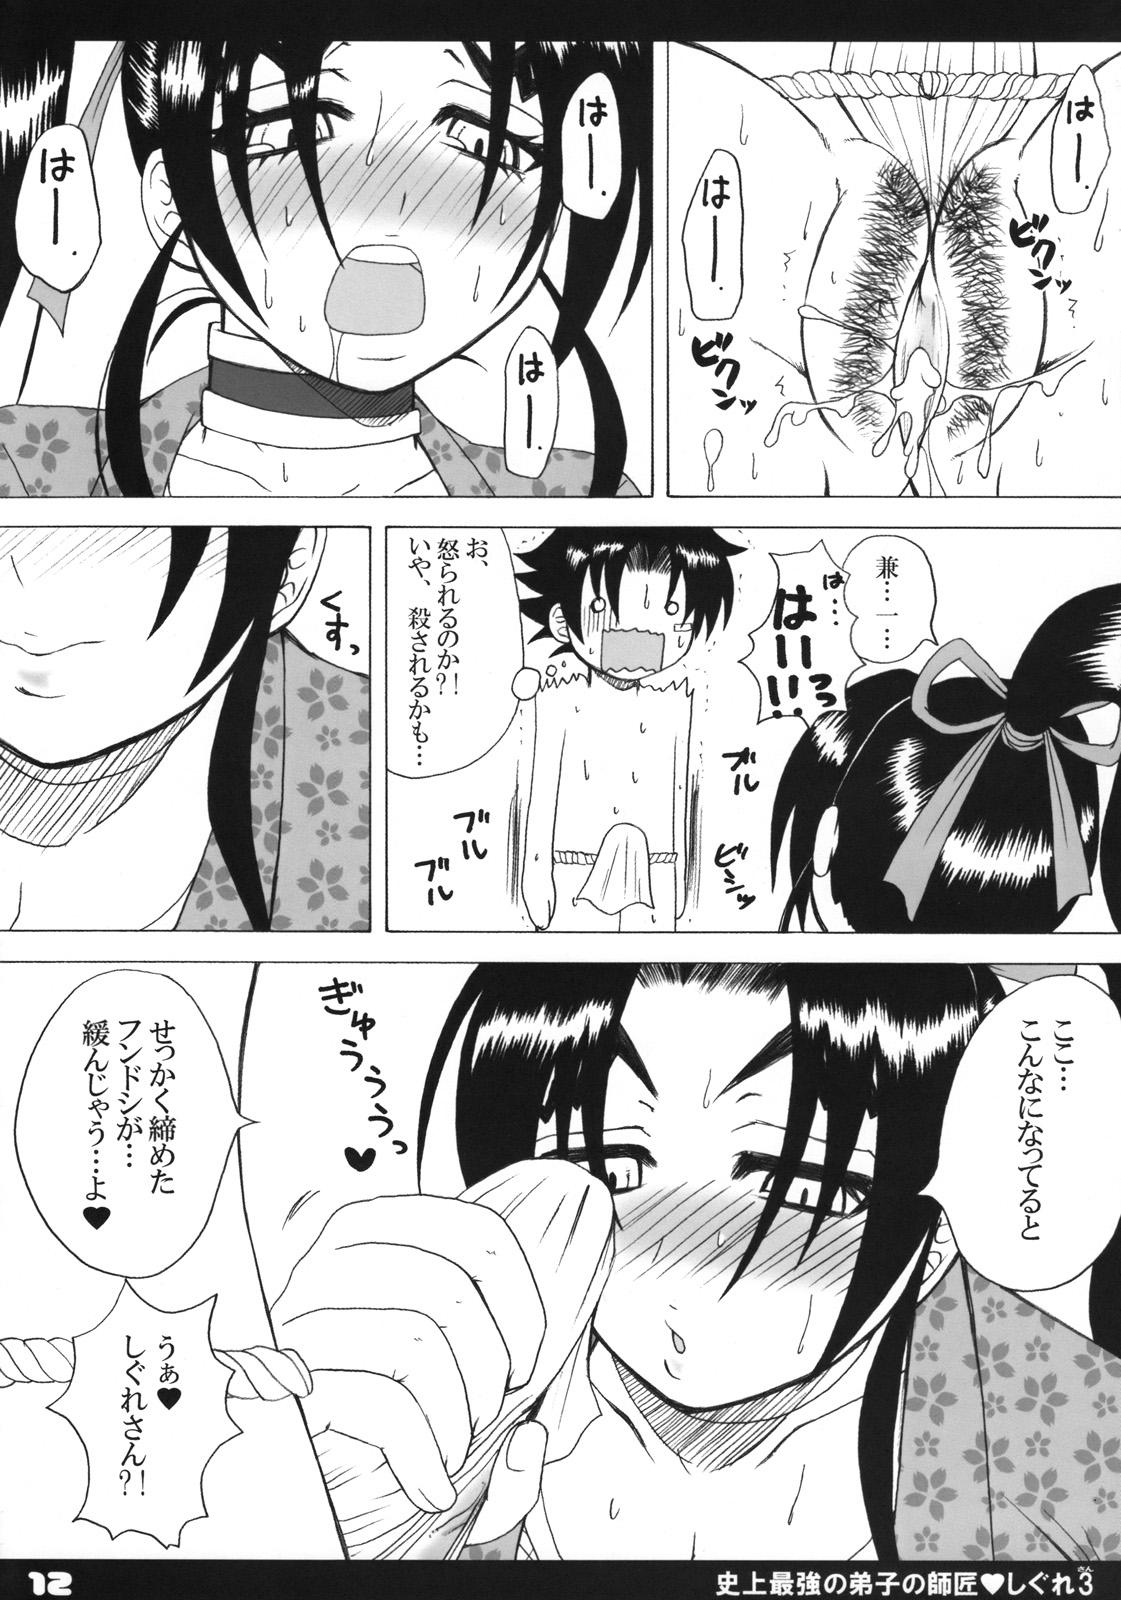 Family Shijou Saikyou no Deshi no Shishou Shigure 3 - Historys strongest disciple kenichi Girl Girl - Page 11